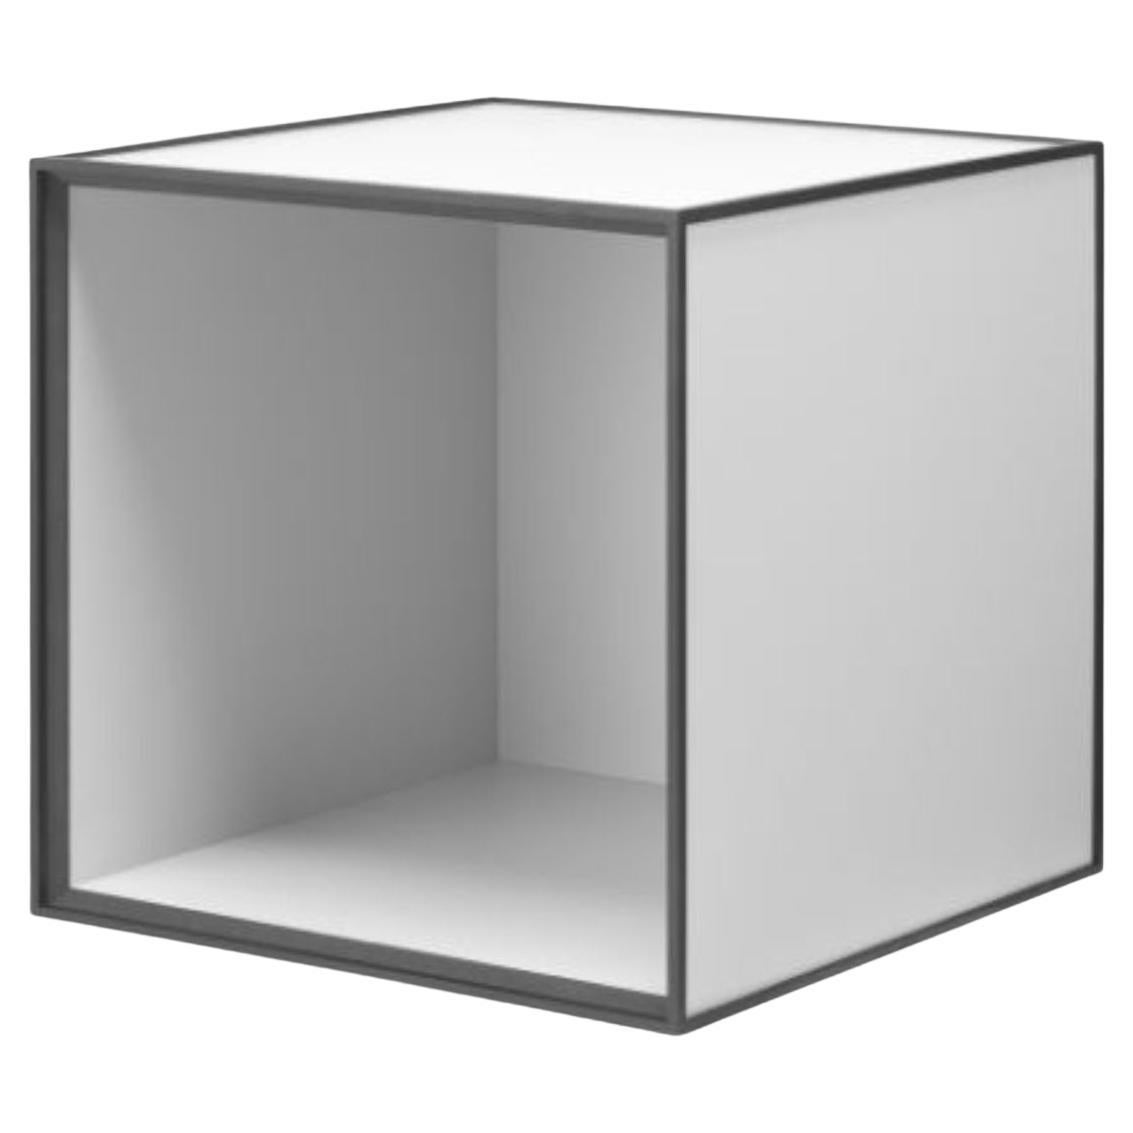 28 Light Grey Frame Box by Lassen